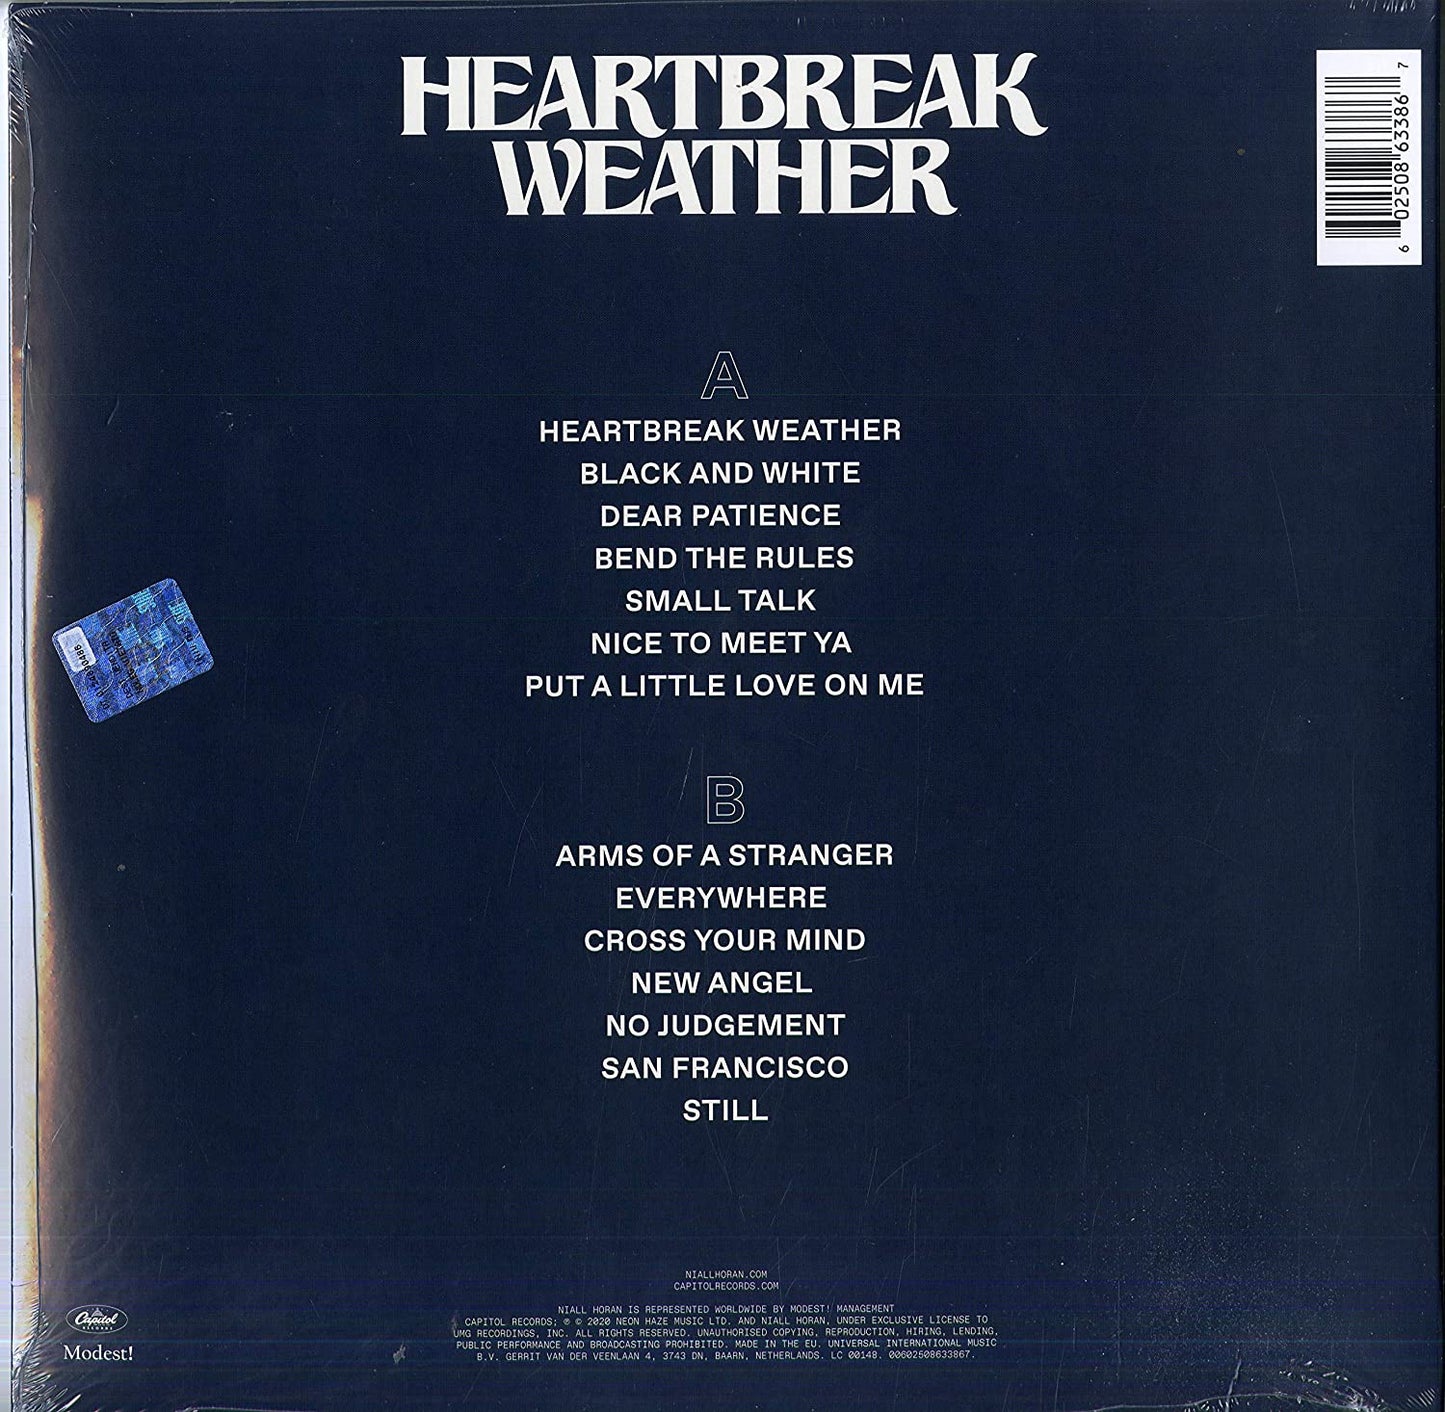 Horan, Niall/Heartbreak Weather [LP]